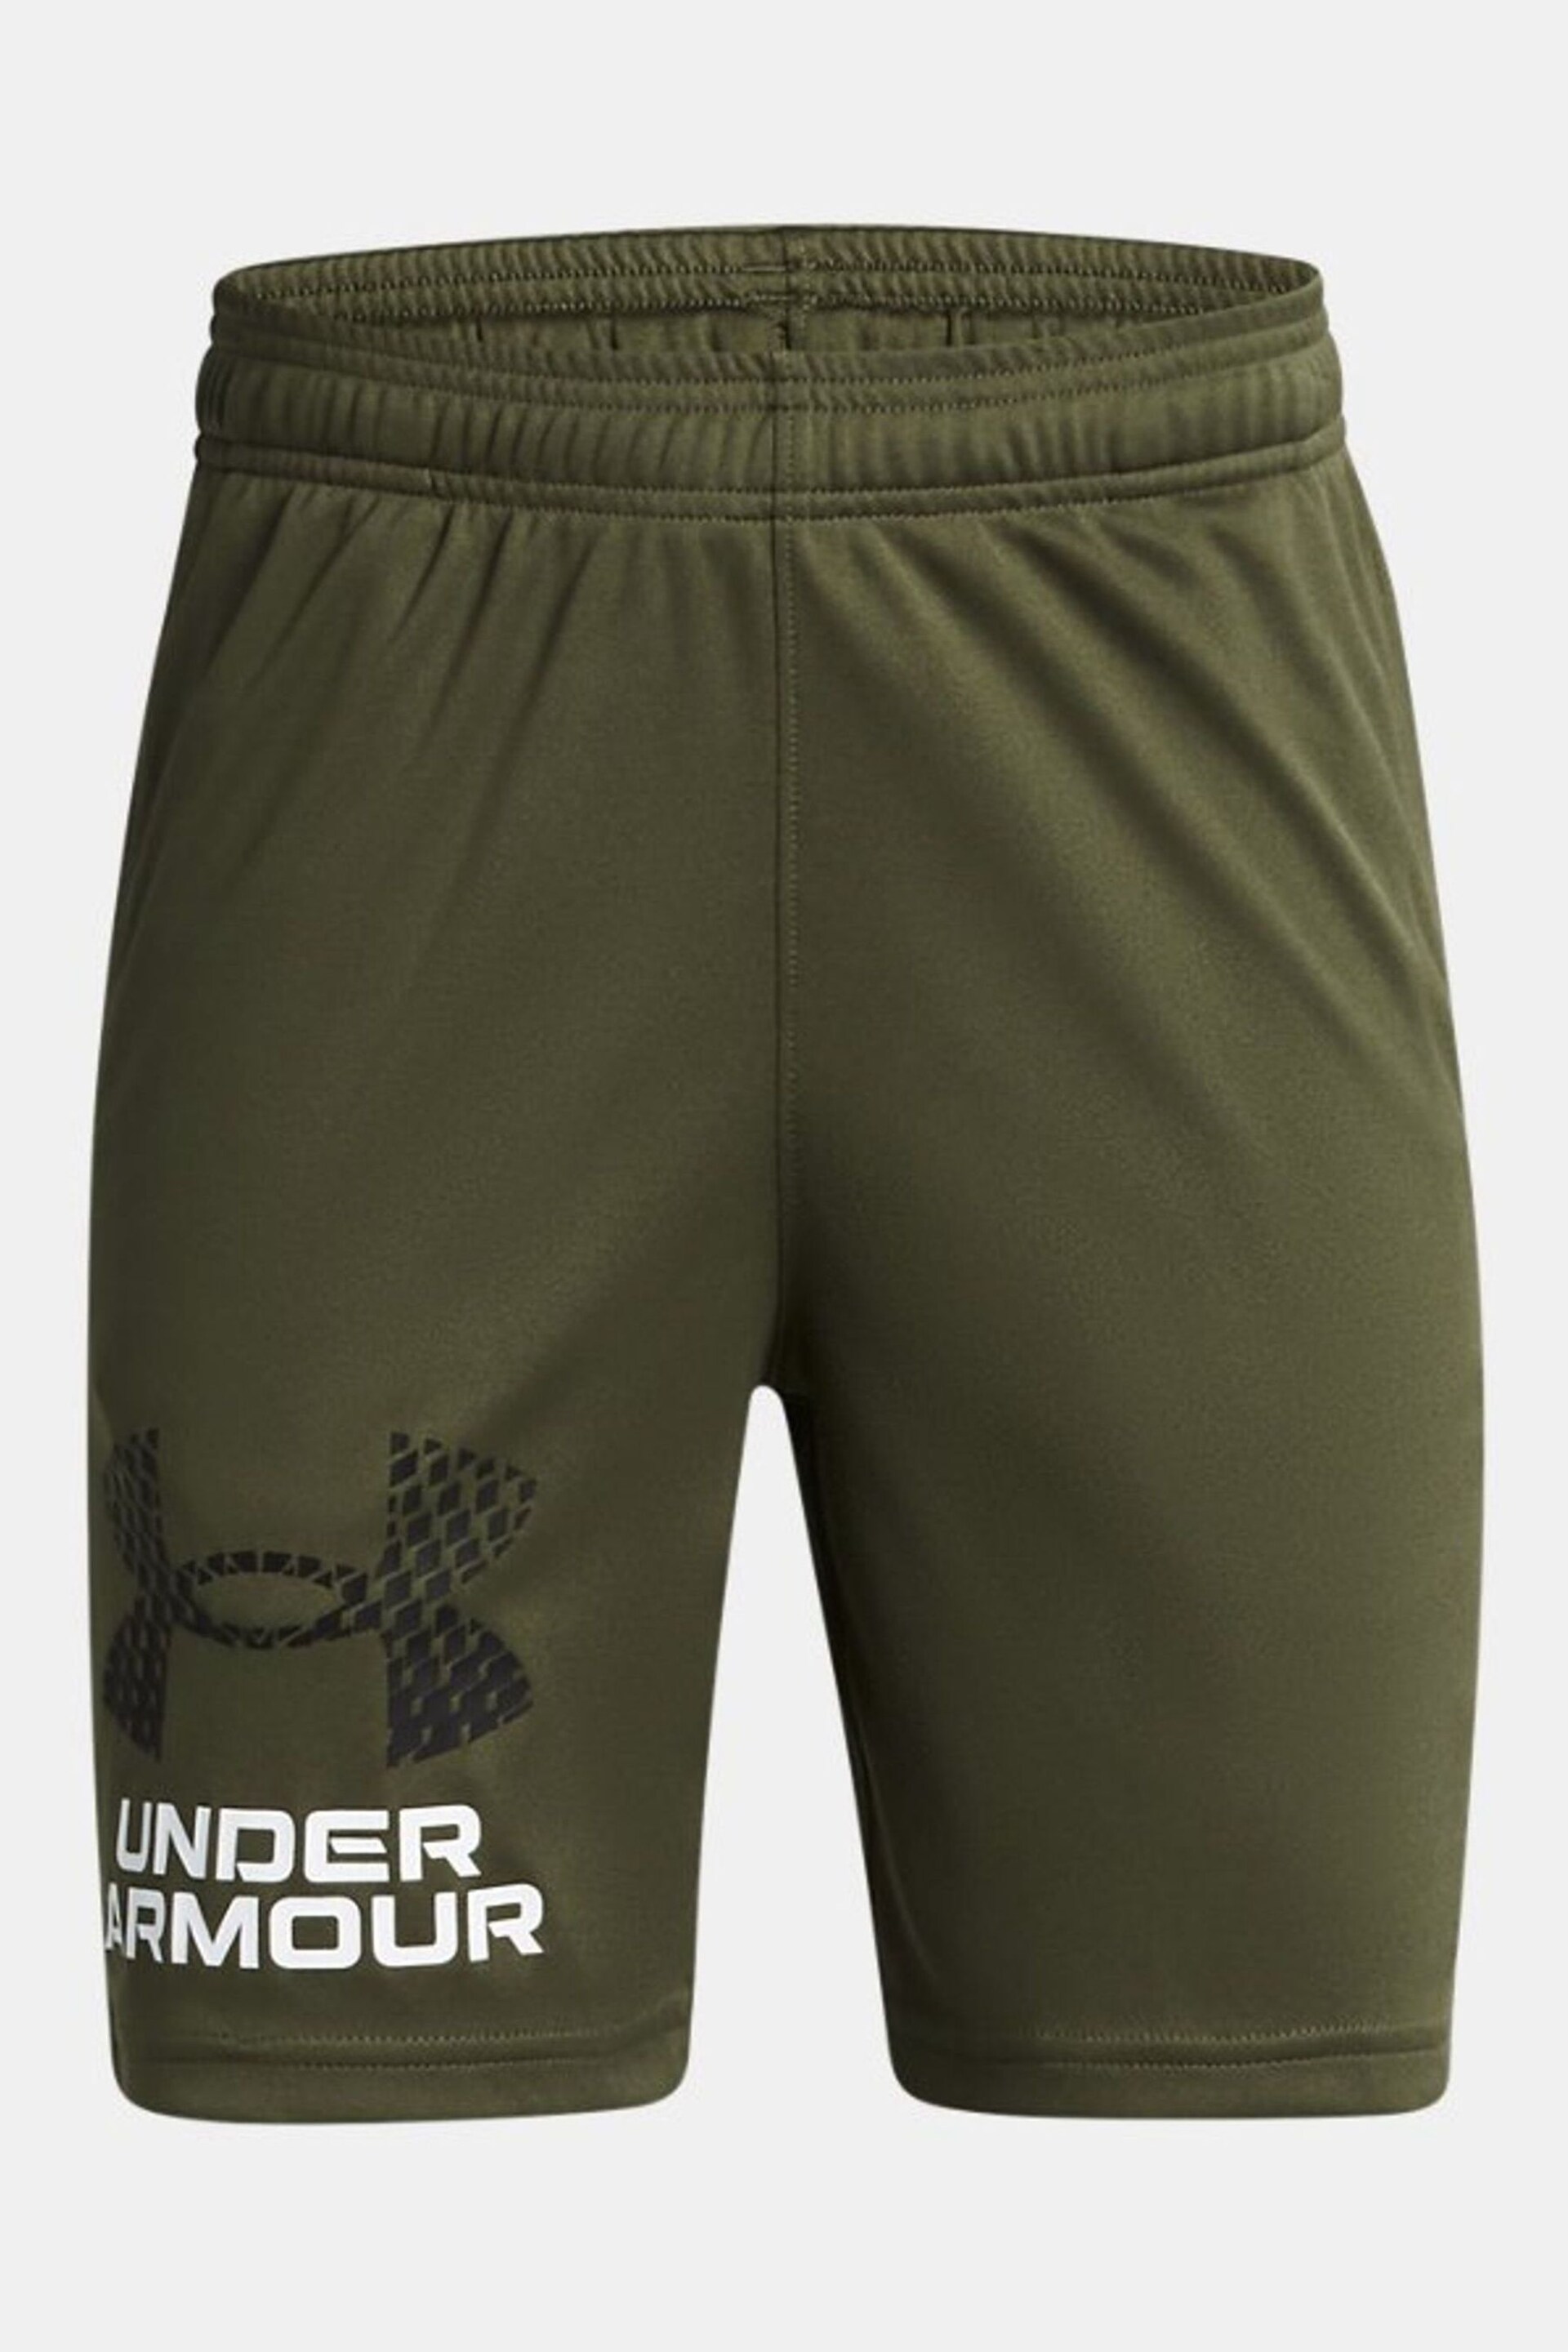 Under Armour Green Tech Logo Shorts - Image 1 of 2